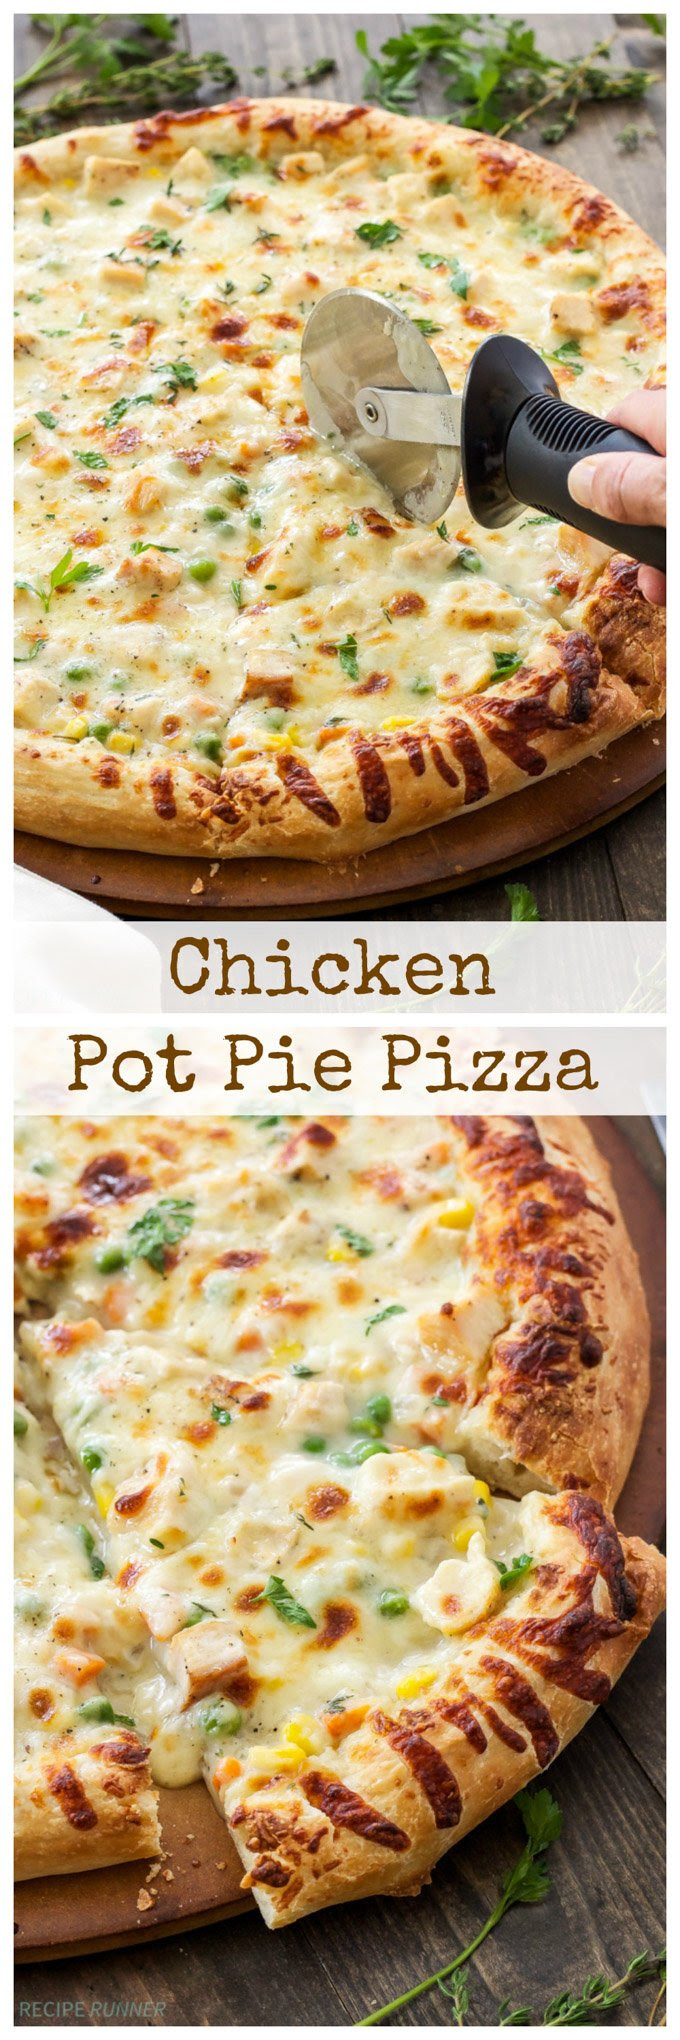 Chicken Pot Pie Pizza - Recipe Runner